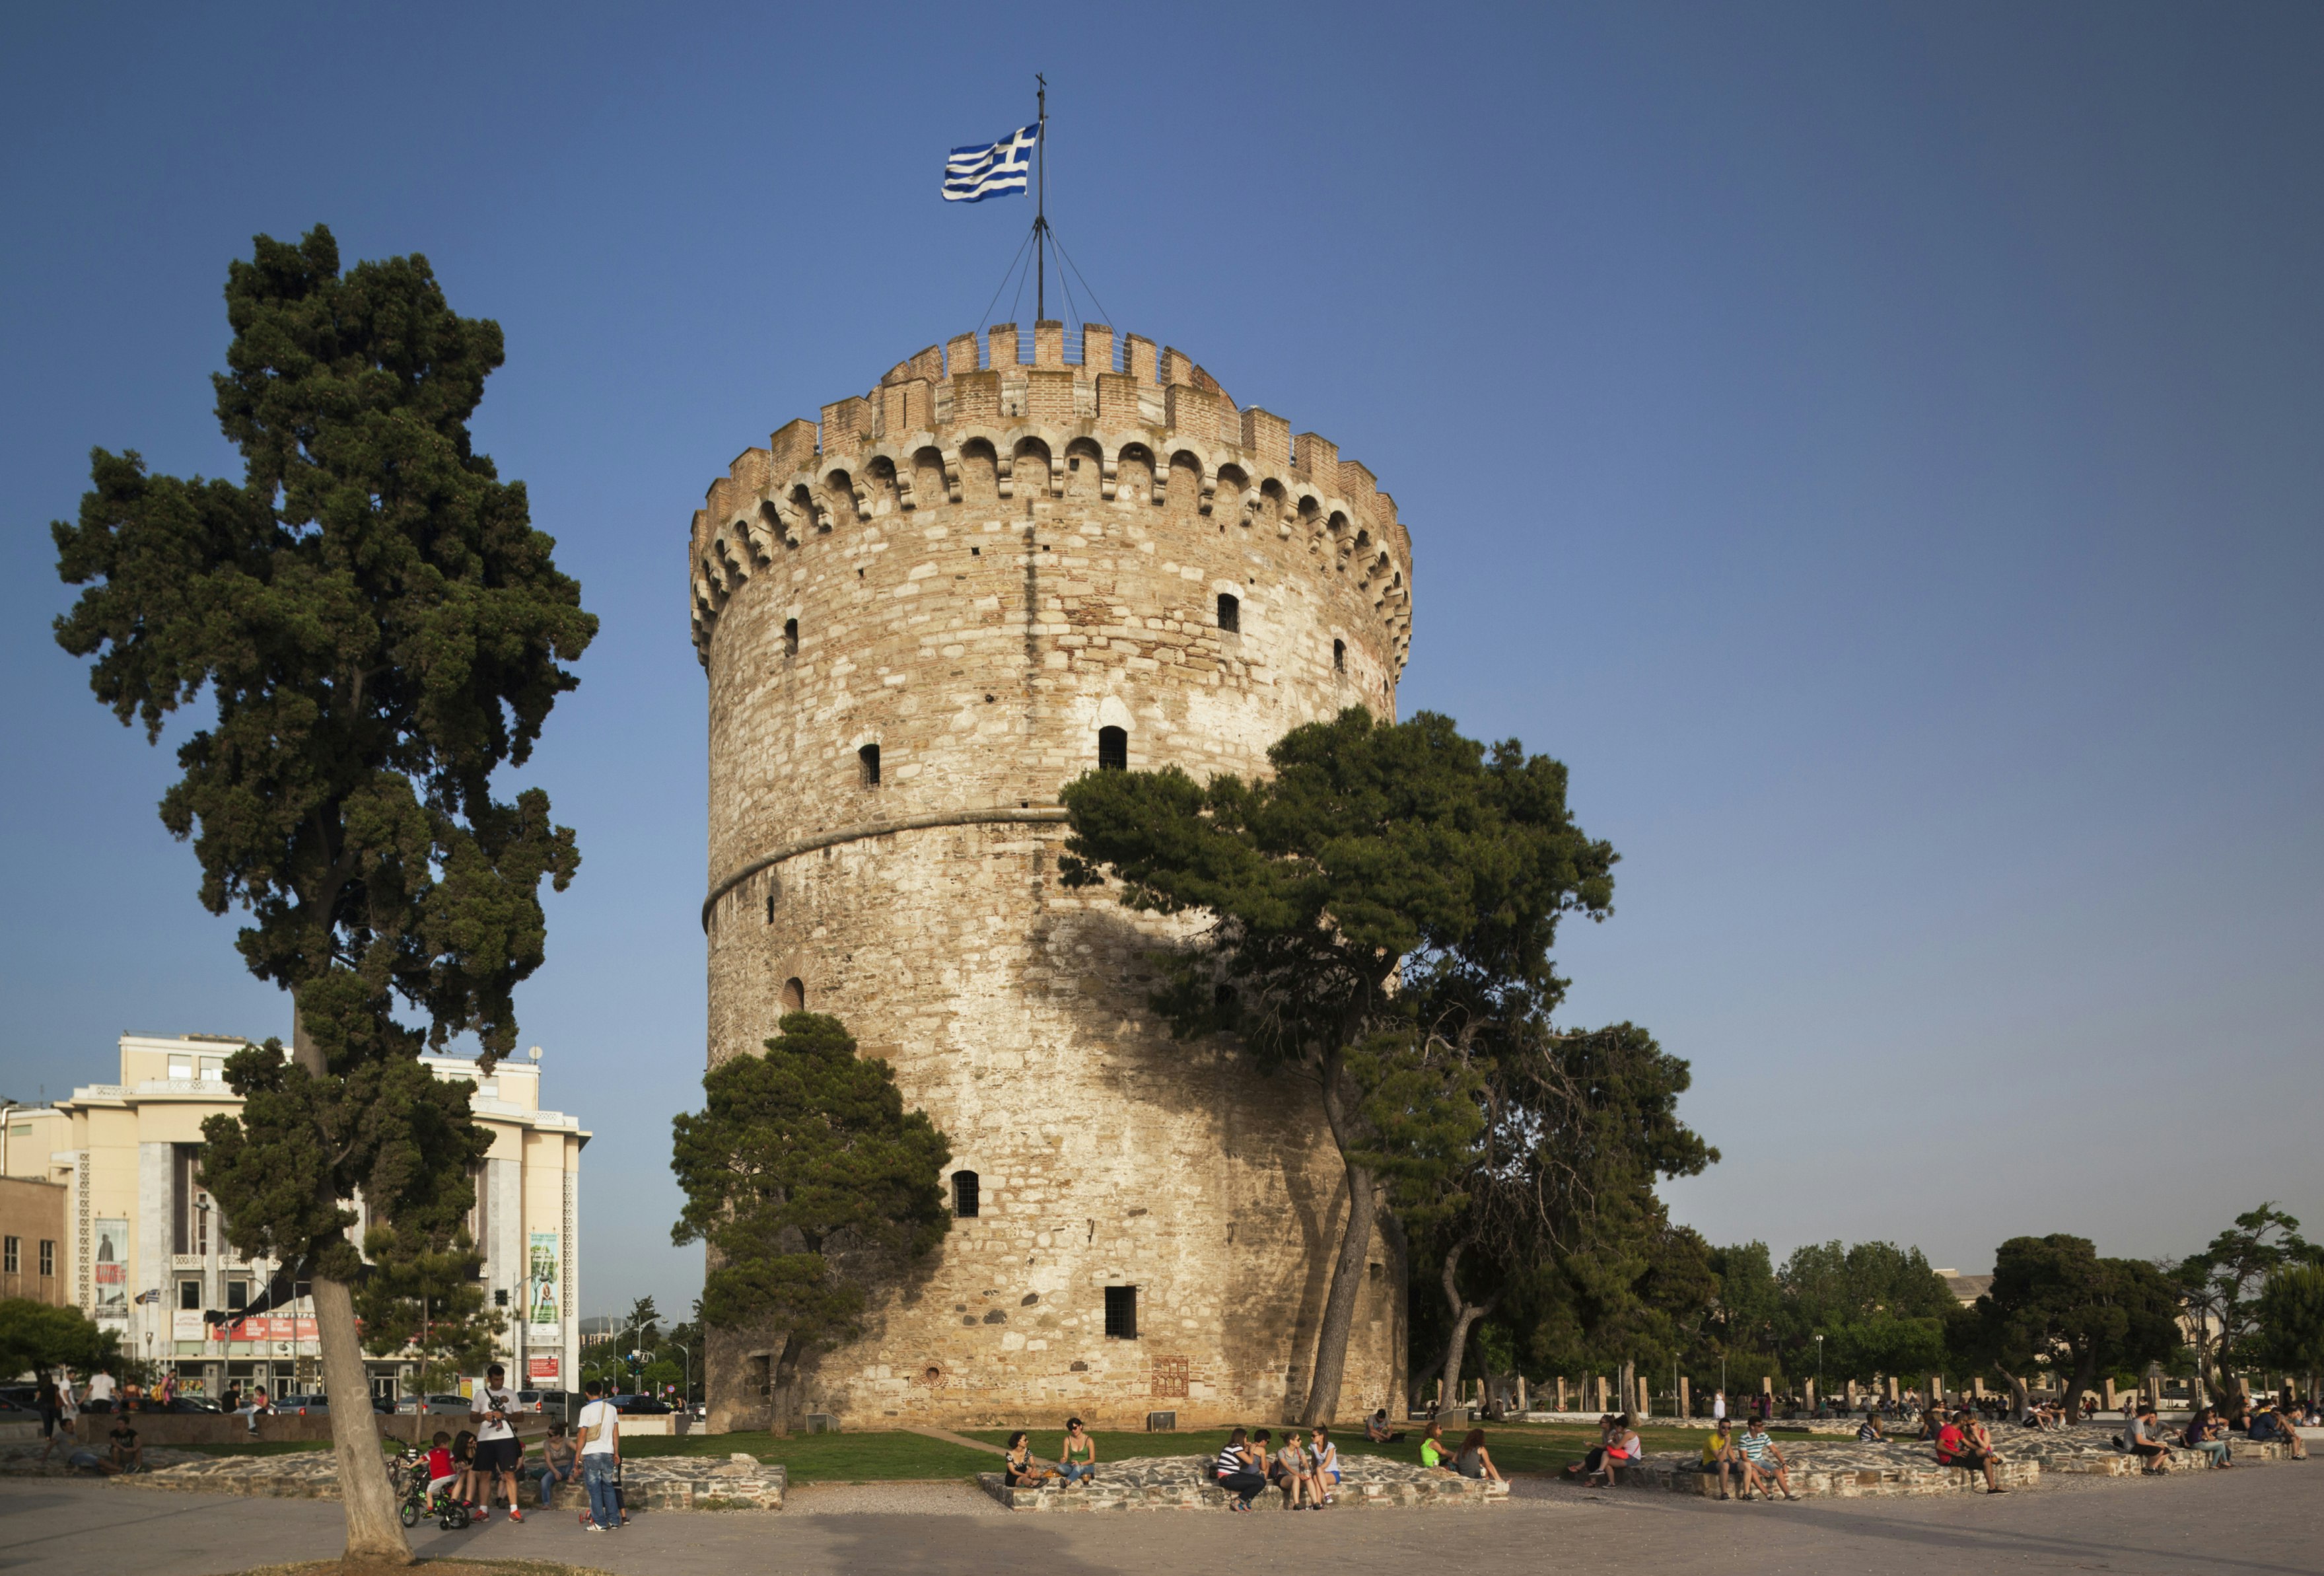 Greece, Thessaloniki, The White Tower